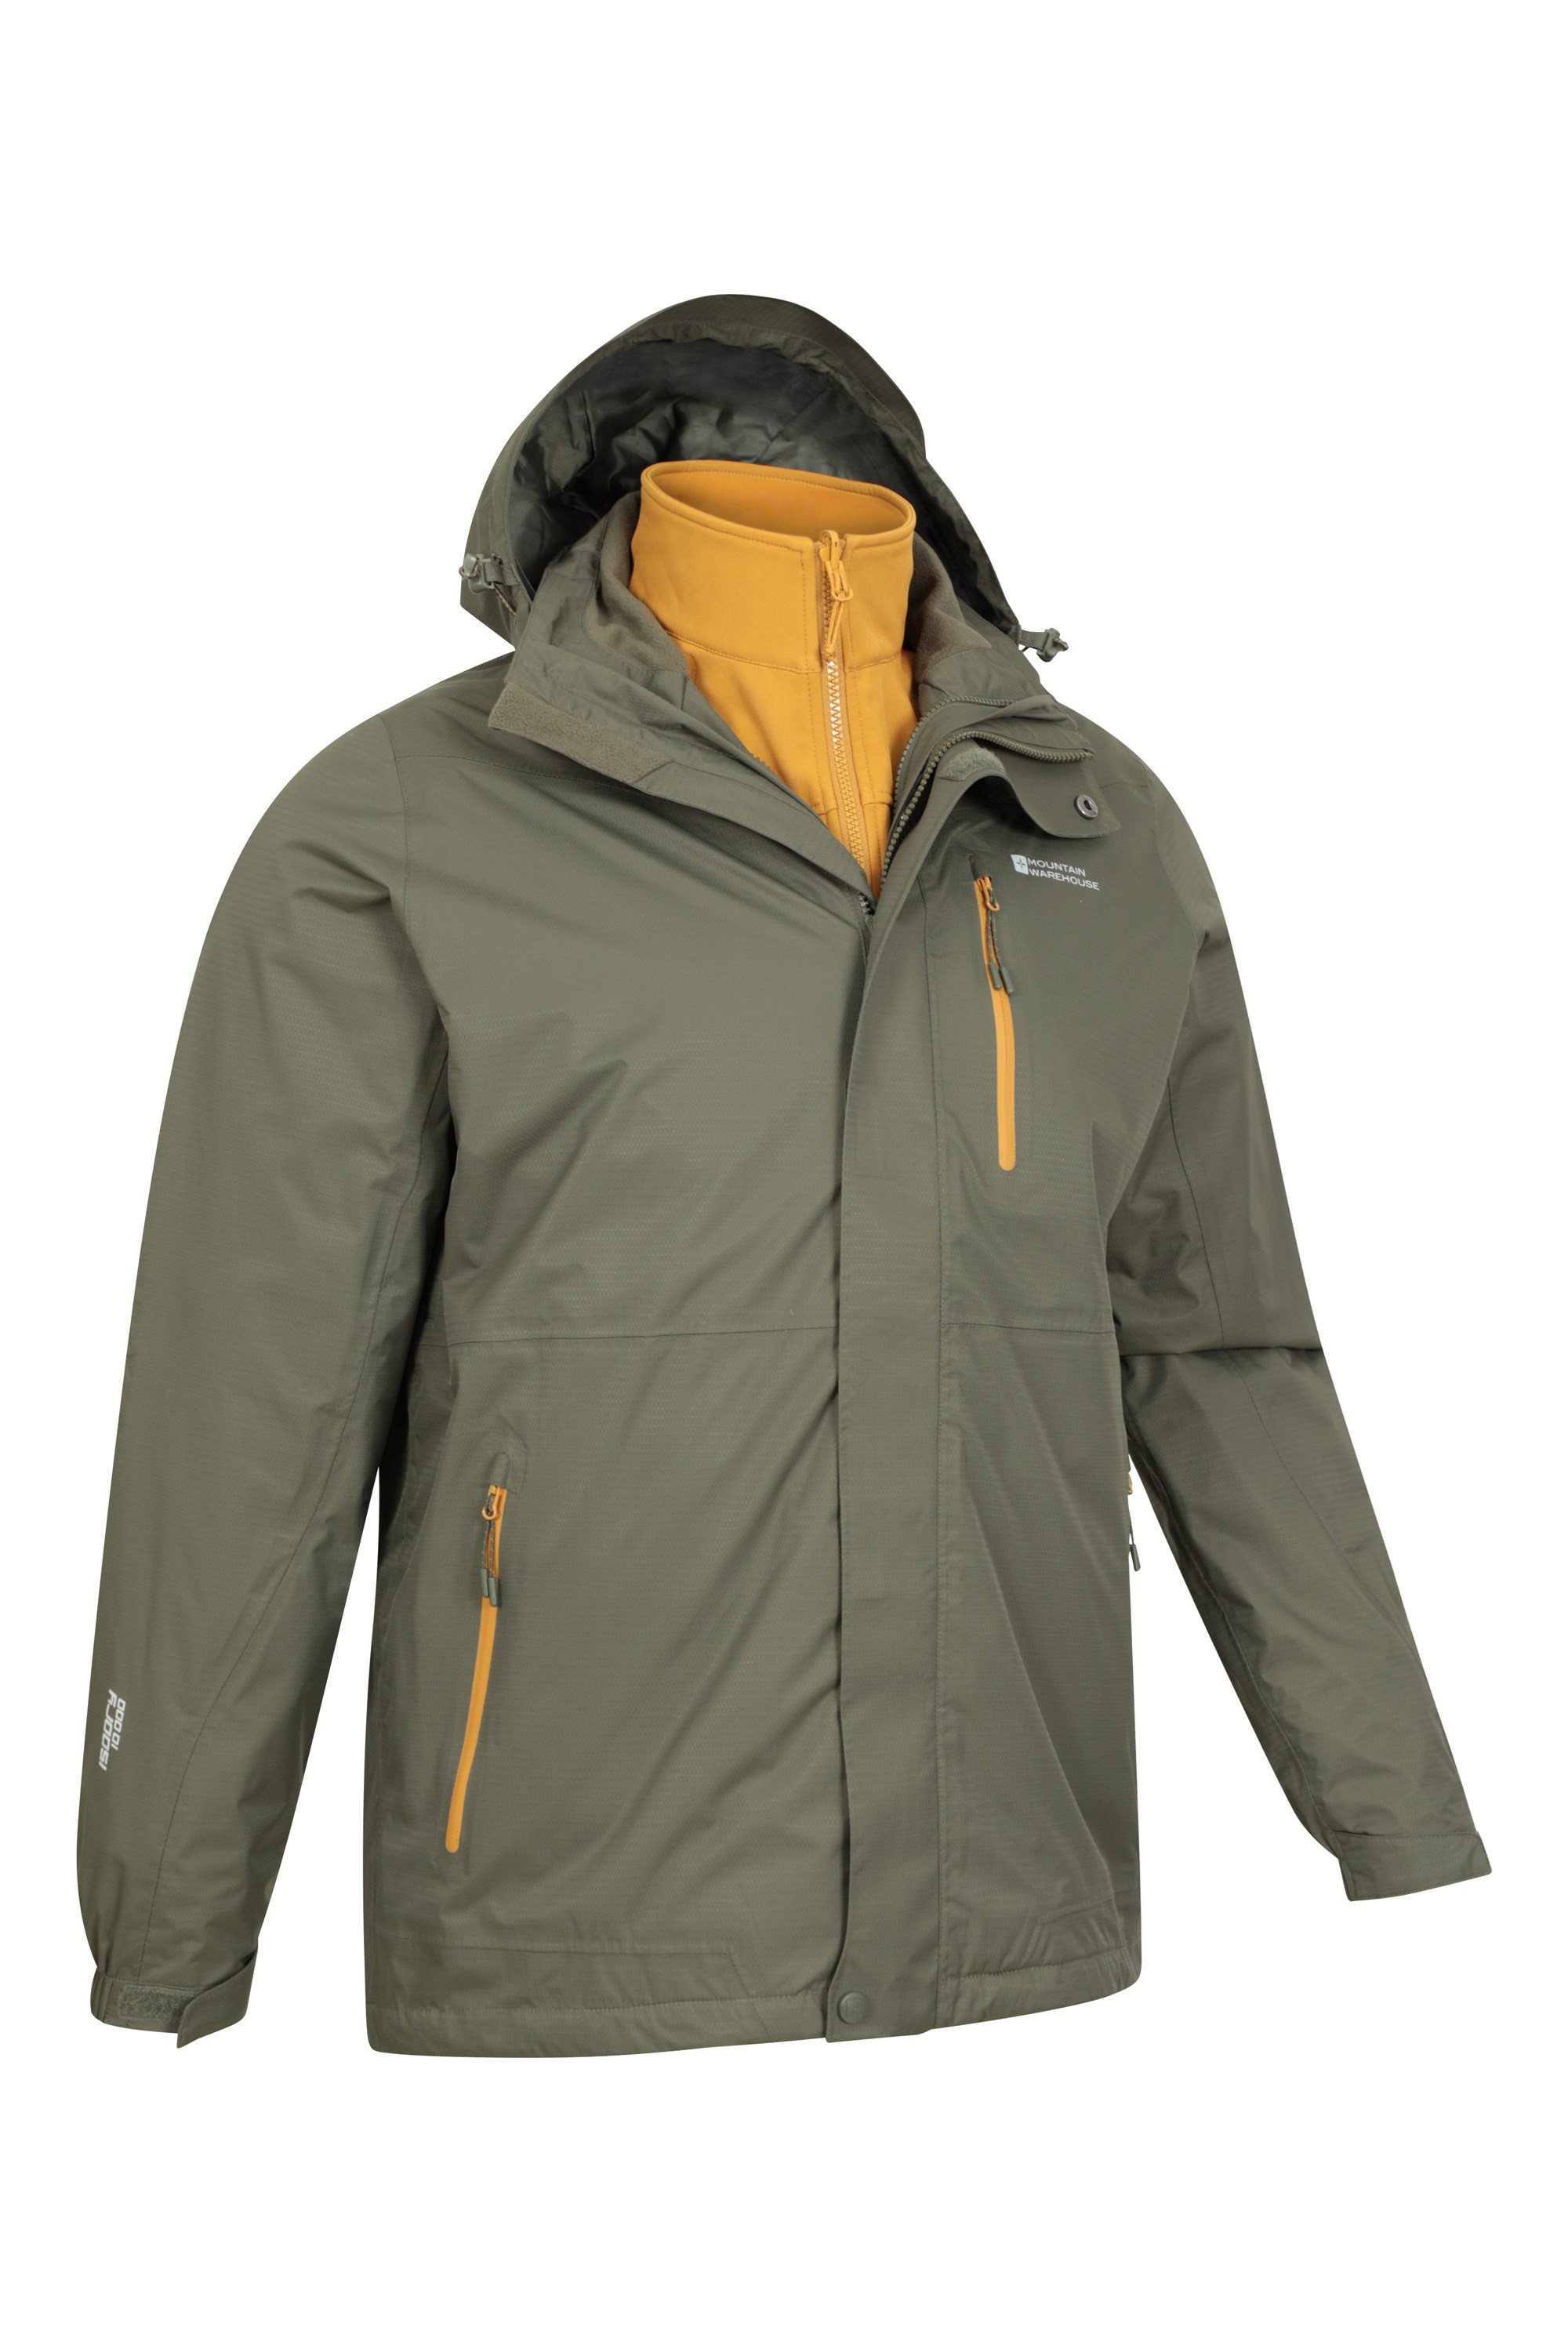 Mens Waterproof Jacket Raincoat Sportswear Skiing 3-in-1 Hooded Softshell Jackets 